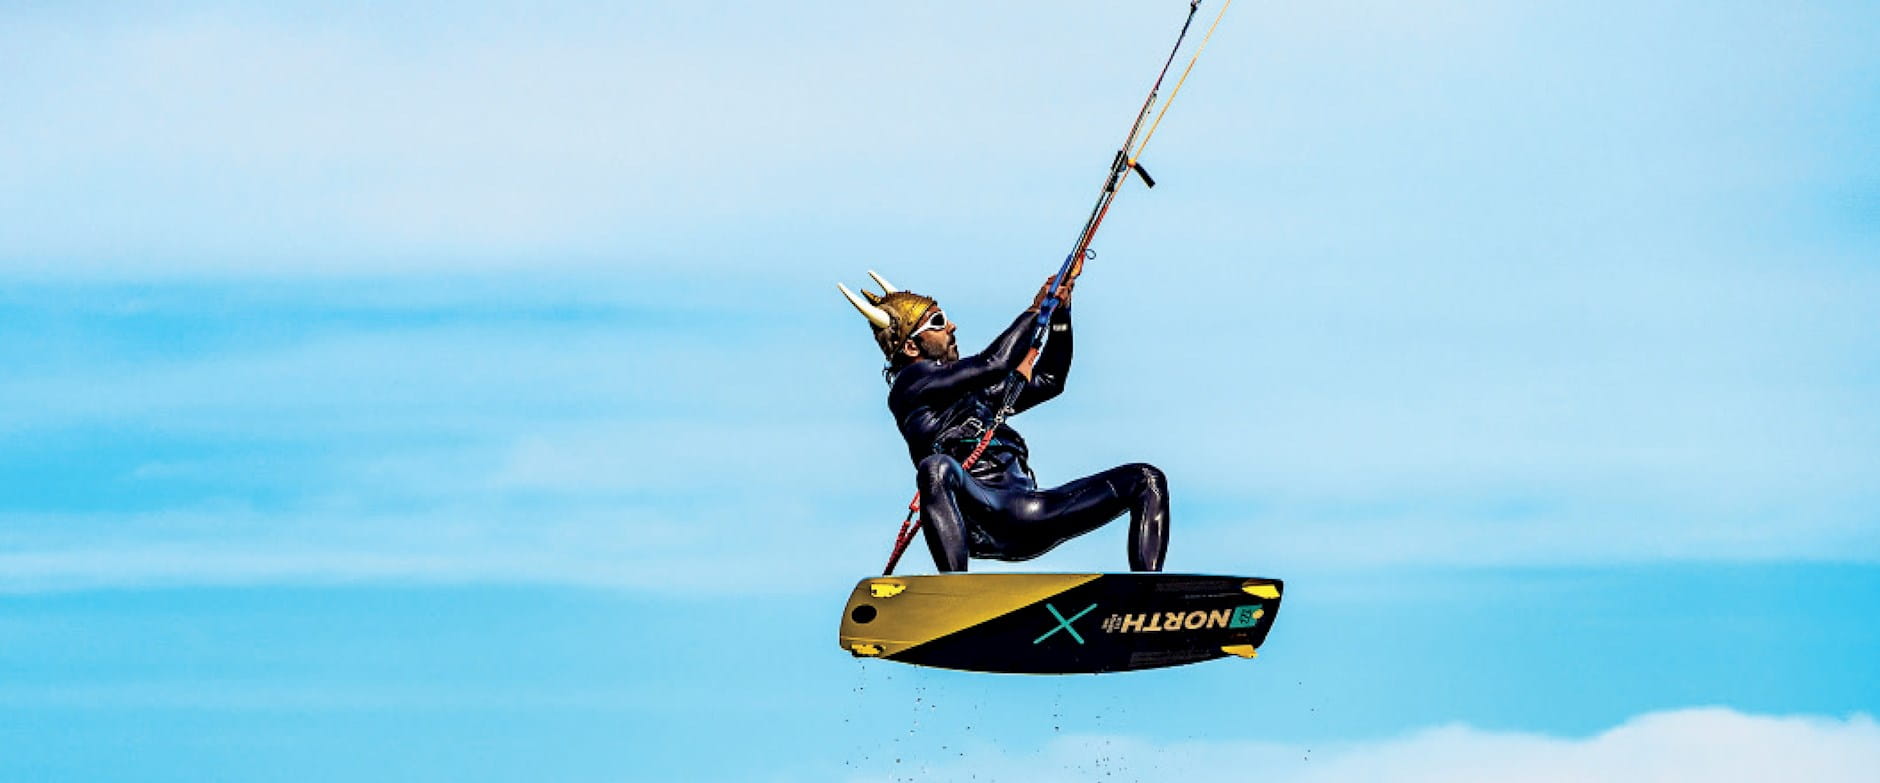 Mo Bhasin riding a kiteboard